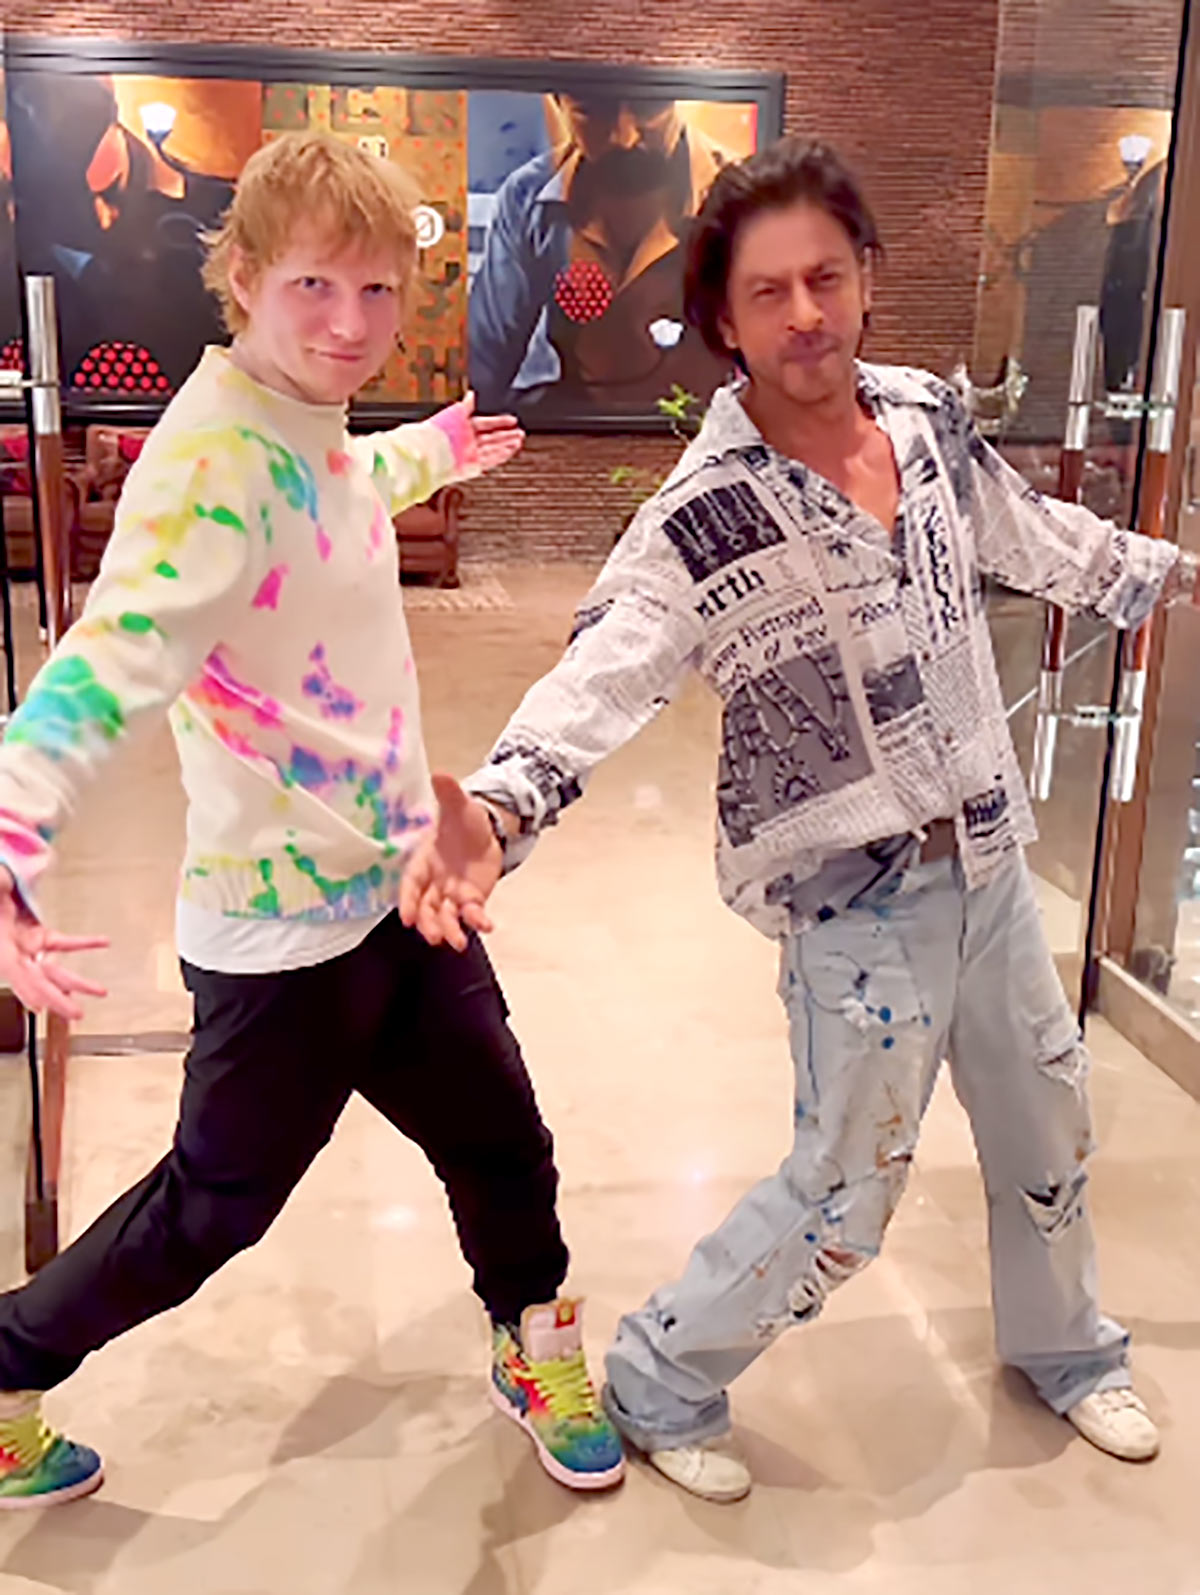 Has Ed Sheeran Got SRK’s Pose Right?